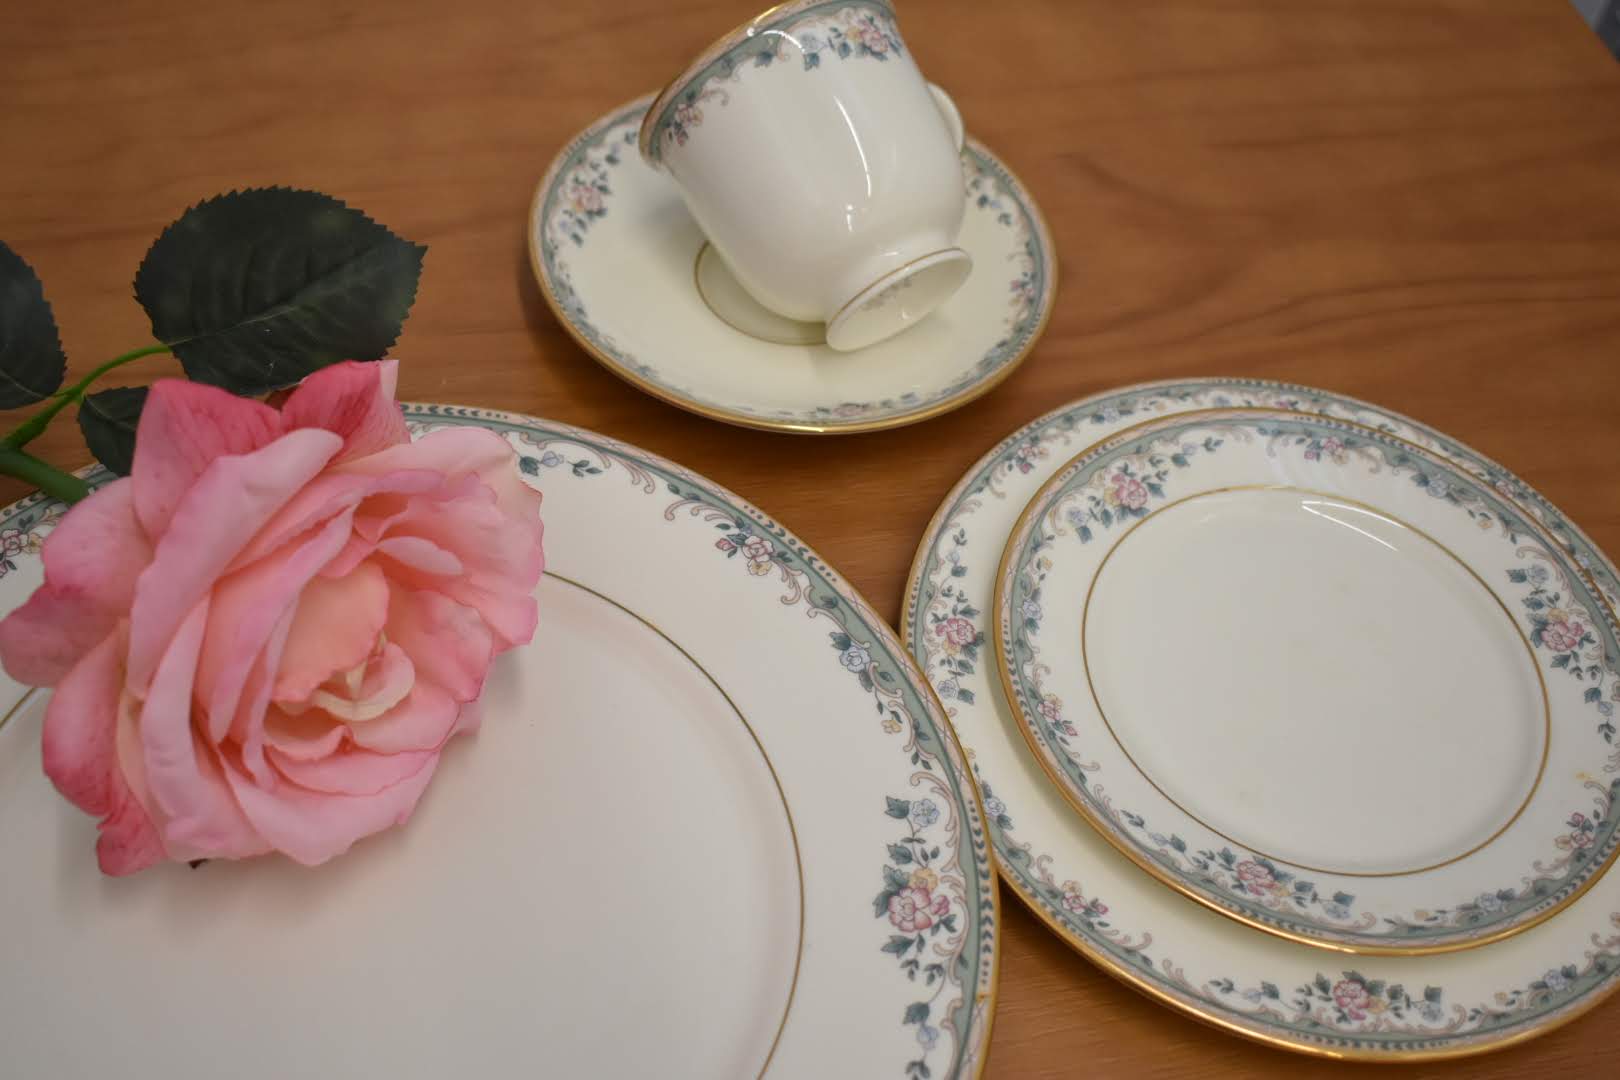 Lenox Spring Vista - Fine Porcelain China - 5 Piece Dinnerware Set 1 place setting - Ivory Color - Gold Rim